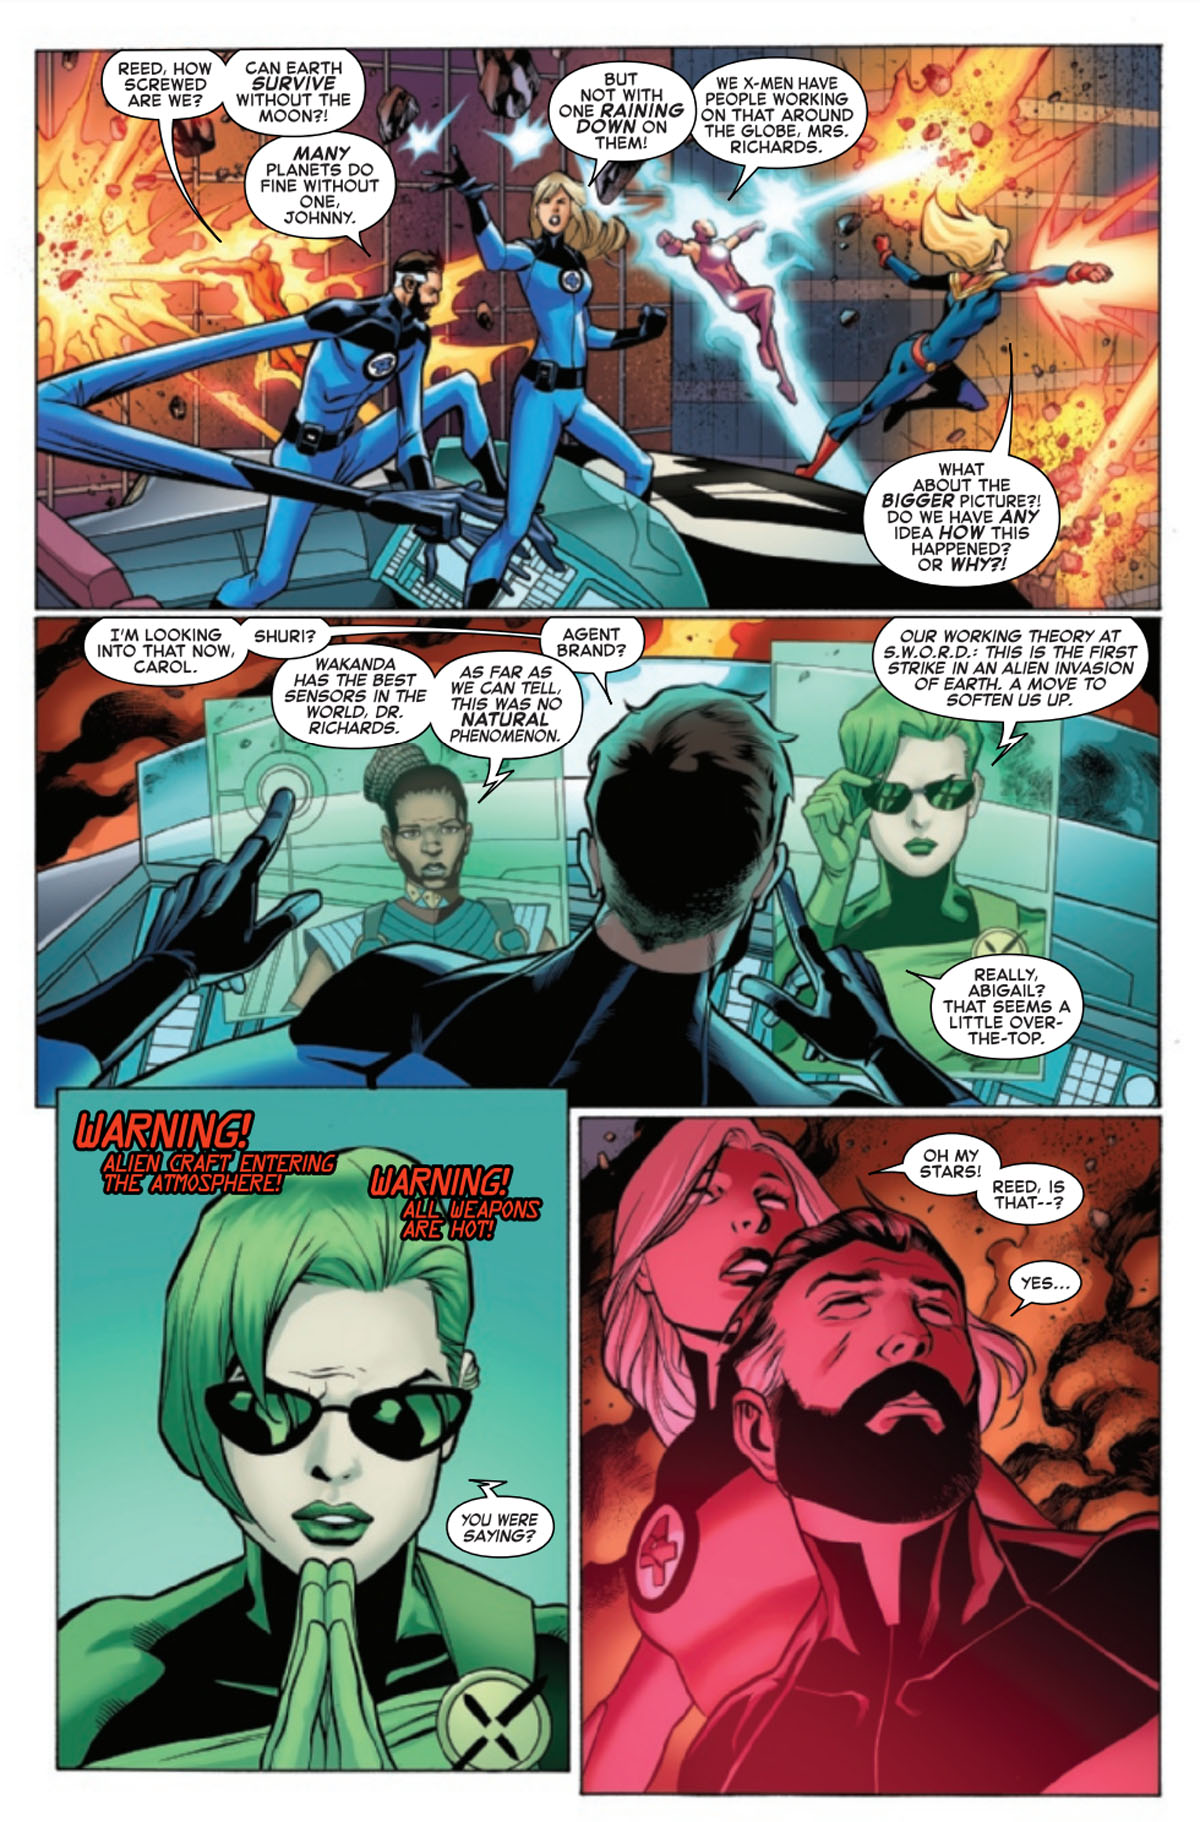 Fantastic Four: Reckoning War #1 page 3